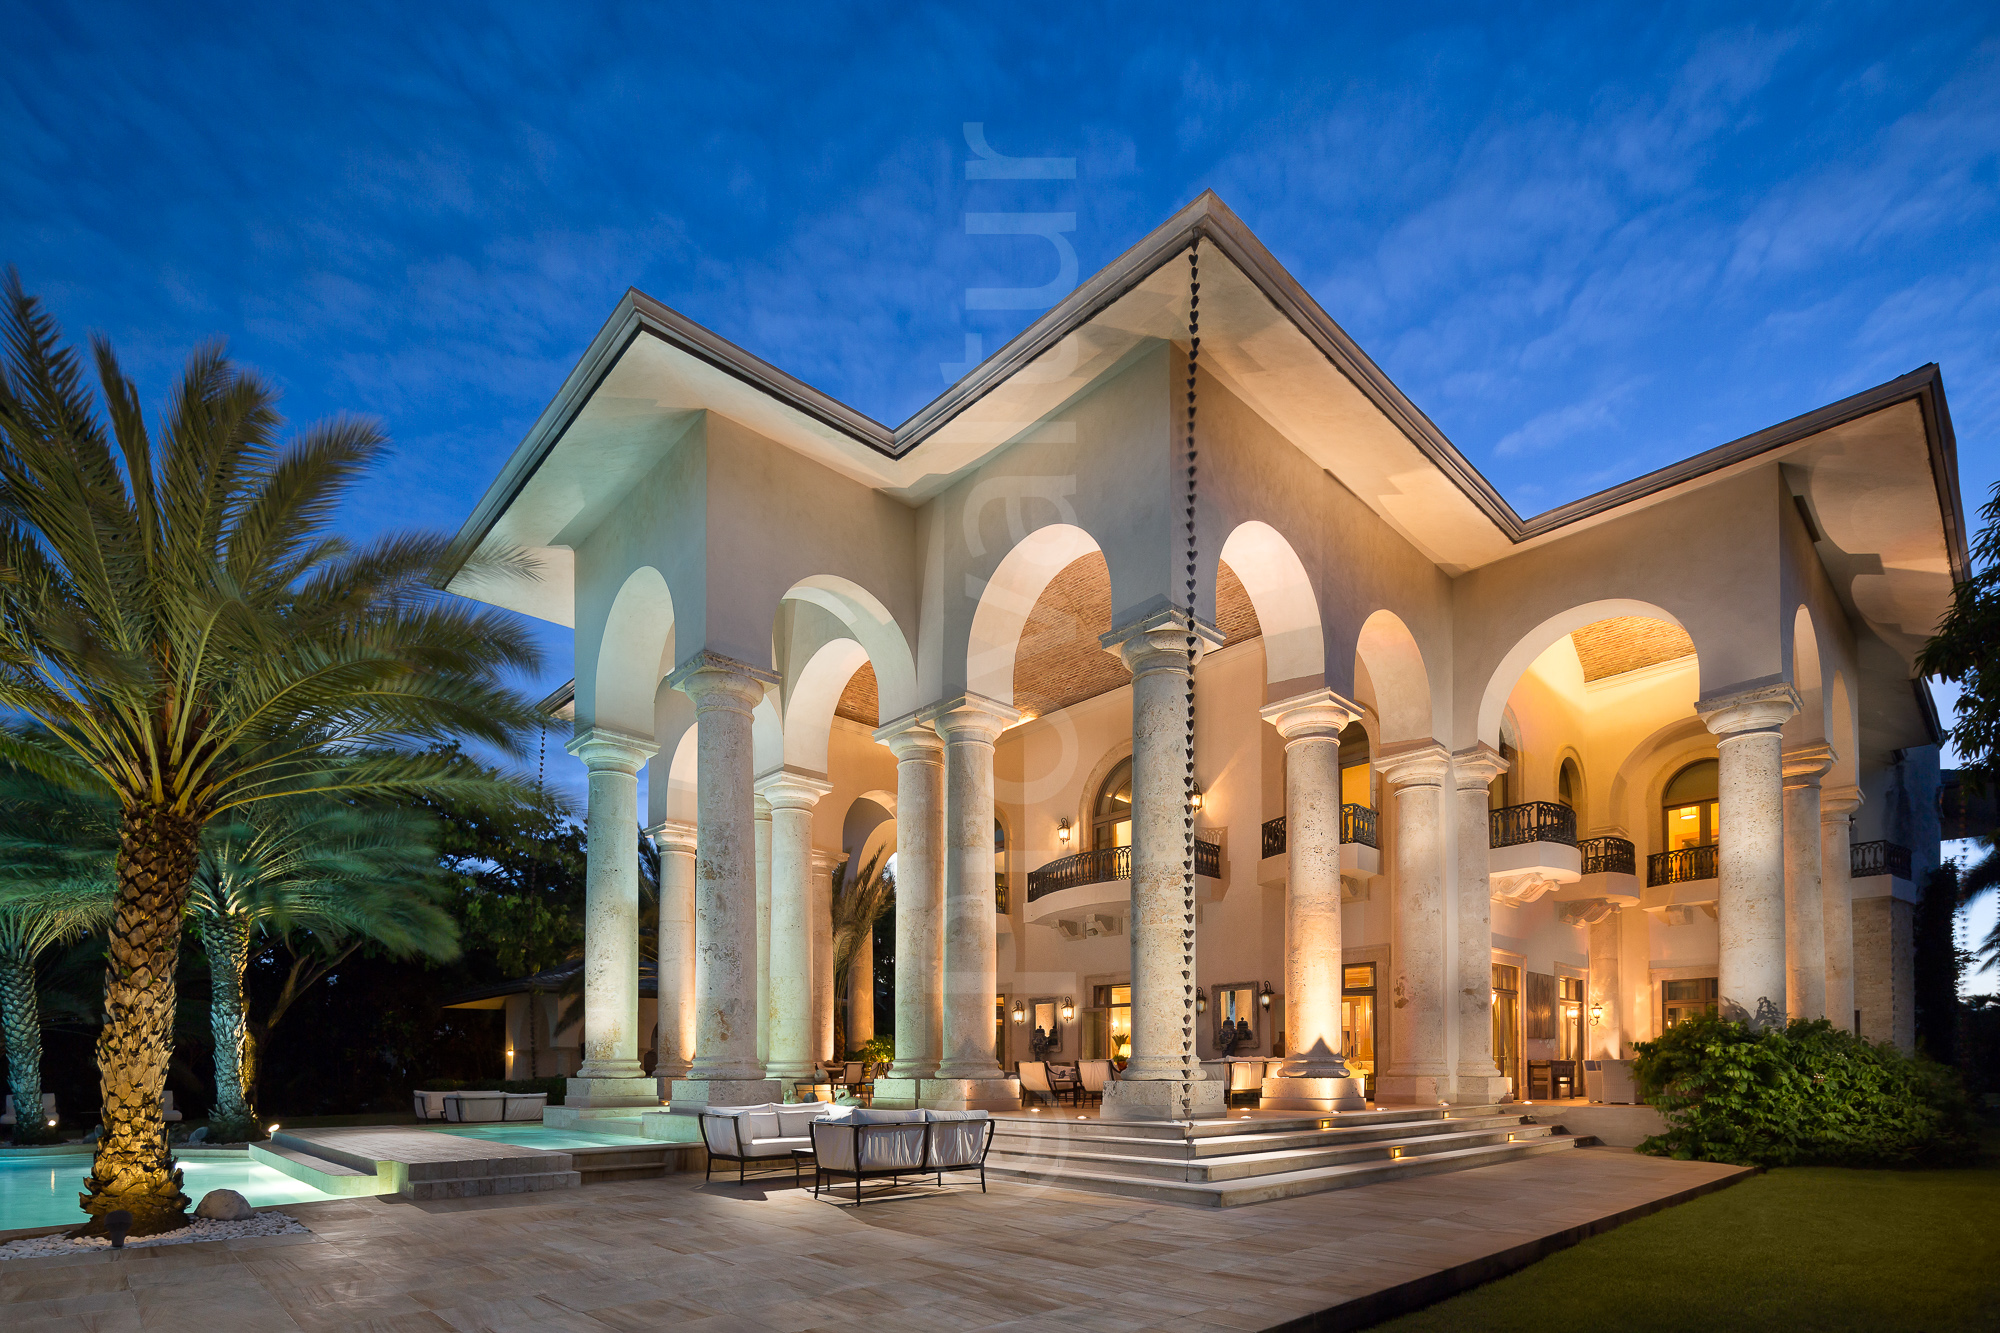 ONLY for RENT – Villa Toscana a Founder Mansion at Punta Espada Golf Course, Juanillo